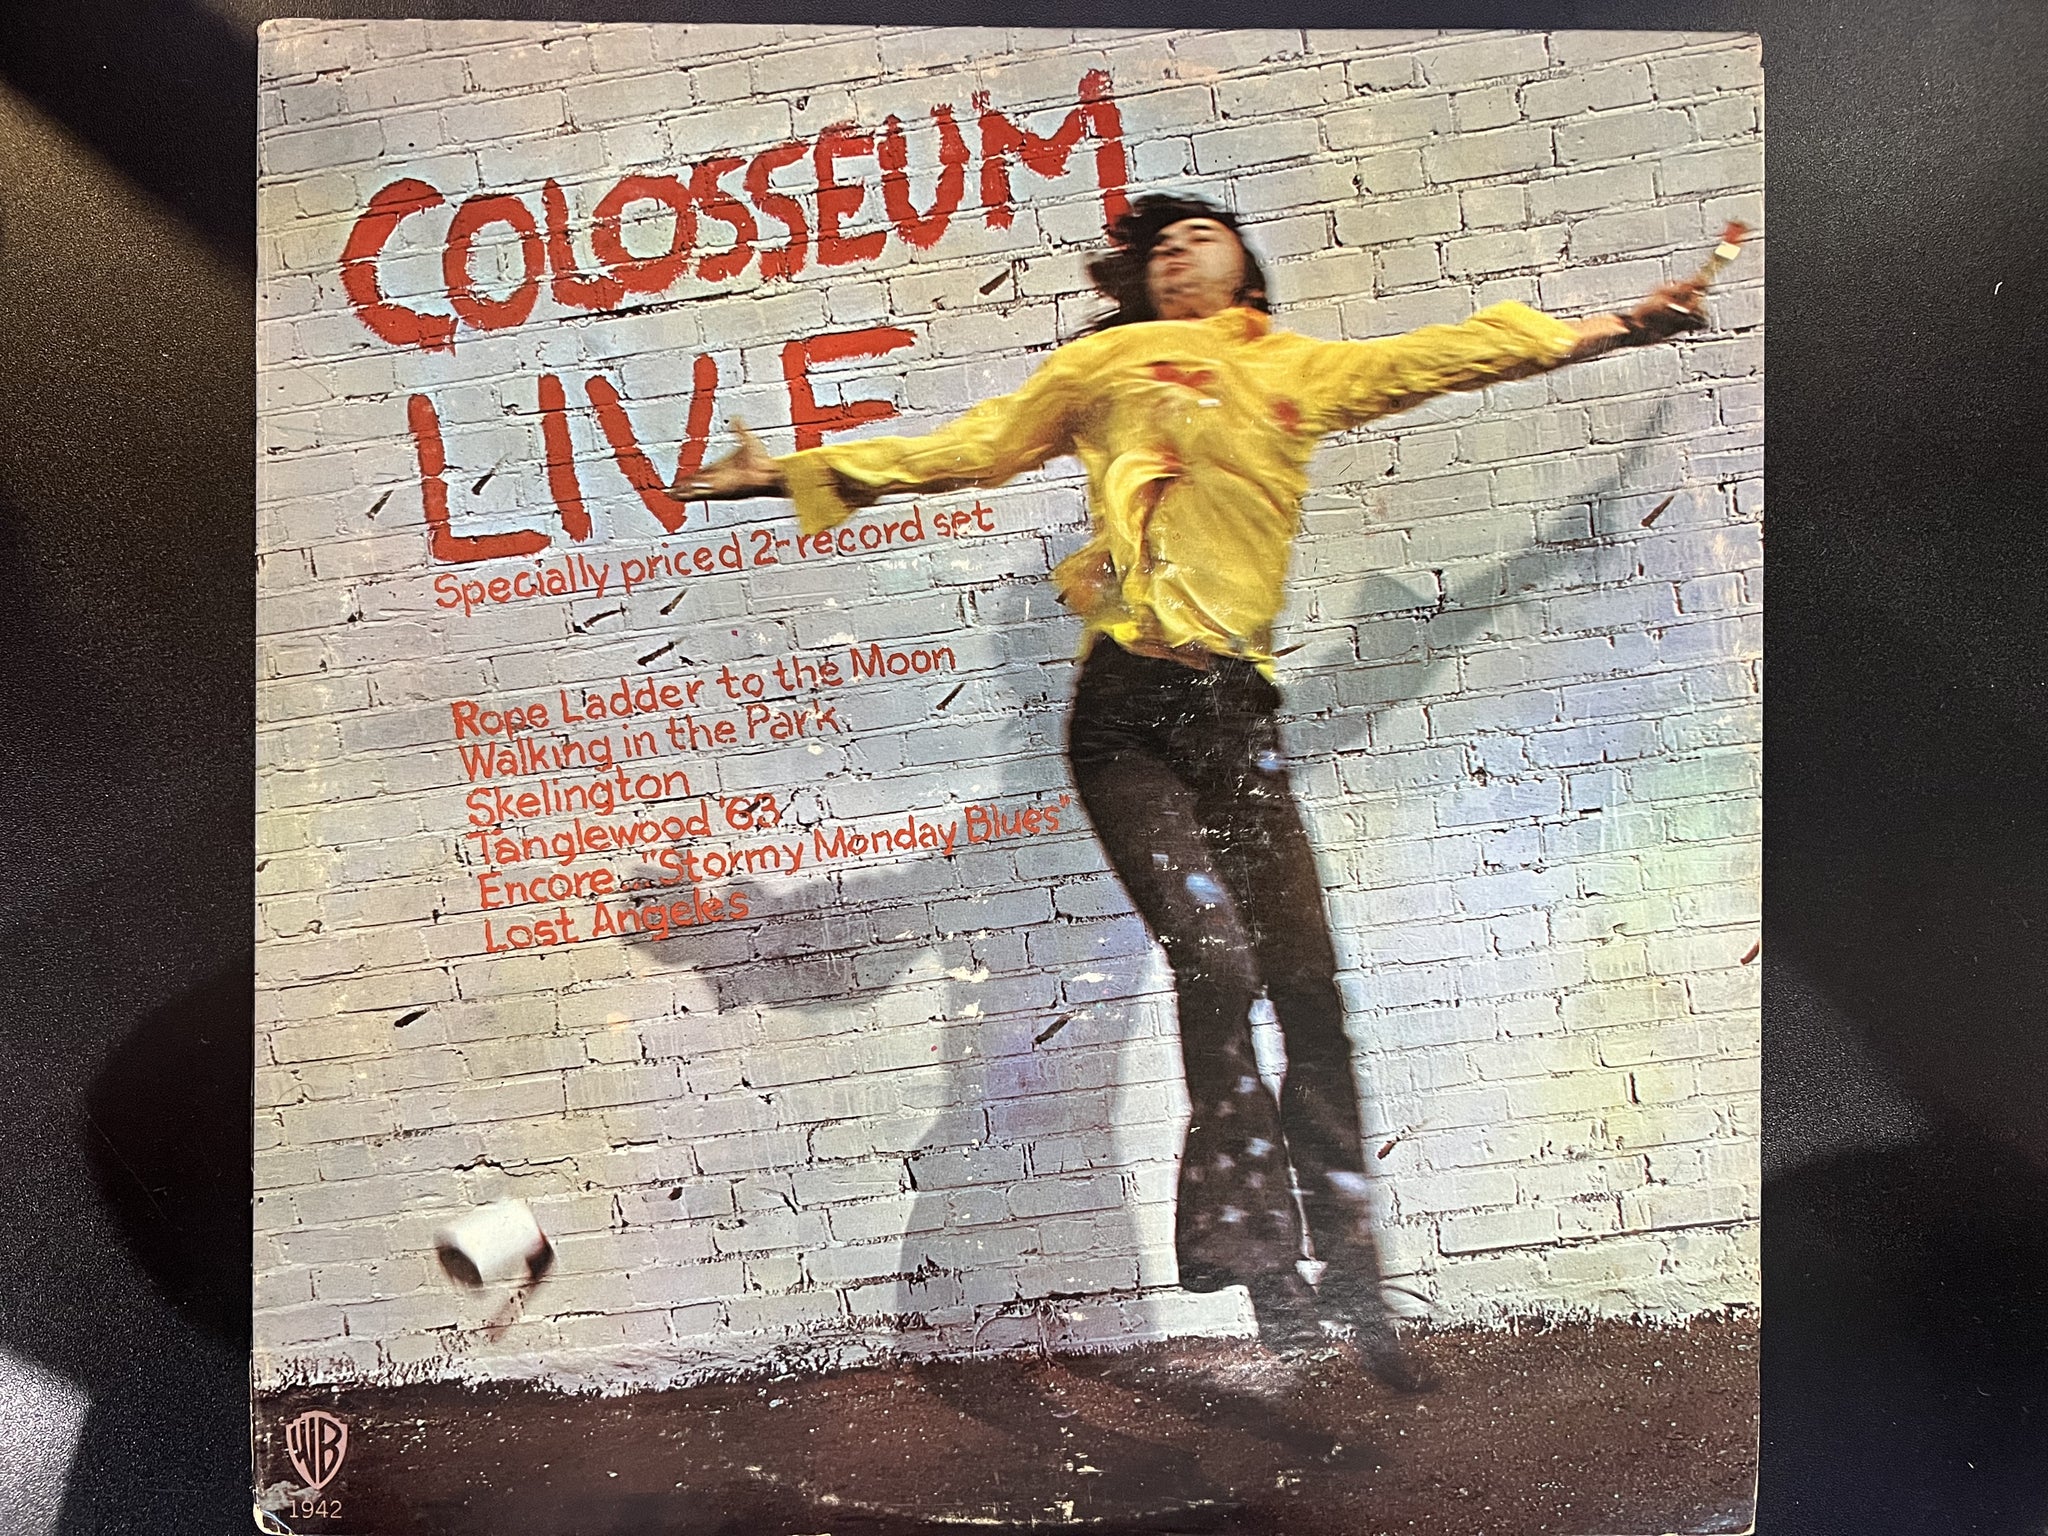 Colosseum – Colosseum Live - VG+ 2 LP Record 1971 Warner USA Promo Vinyl - Psychedelic Rock / Experimental / Prog Rock